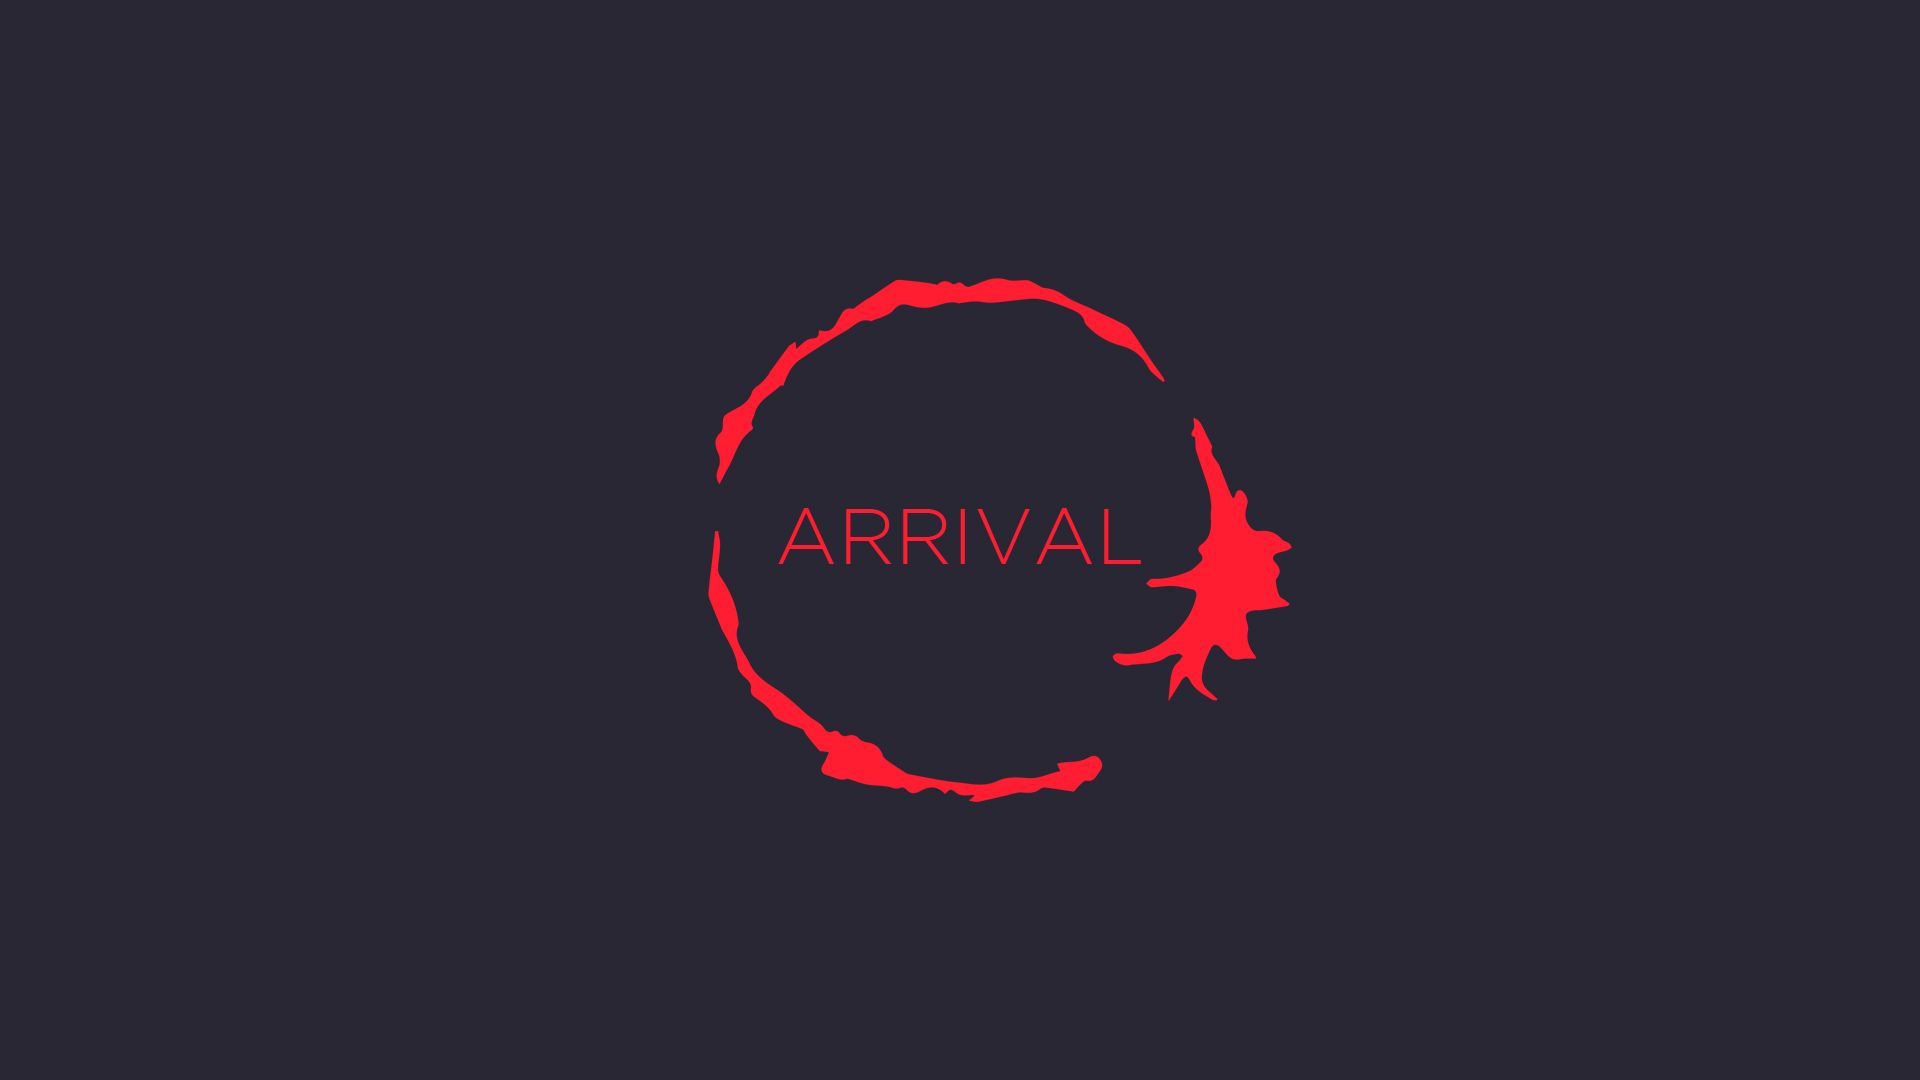 Minimalistic Arrival [Movie] [1920x1080]. Wallpaper, Arrivals, Arrival movie